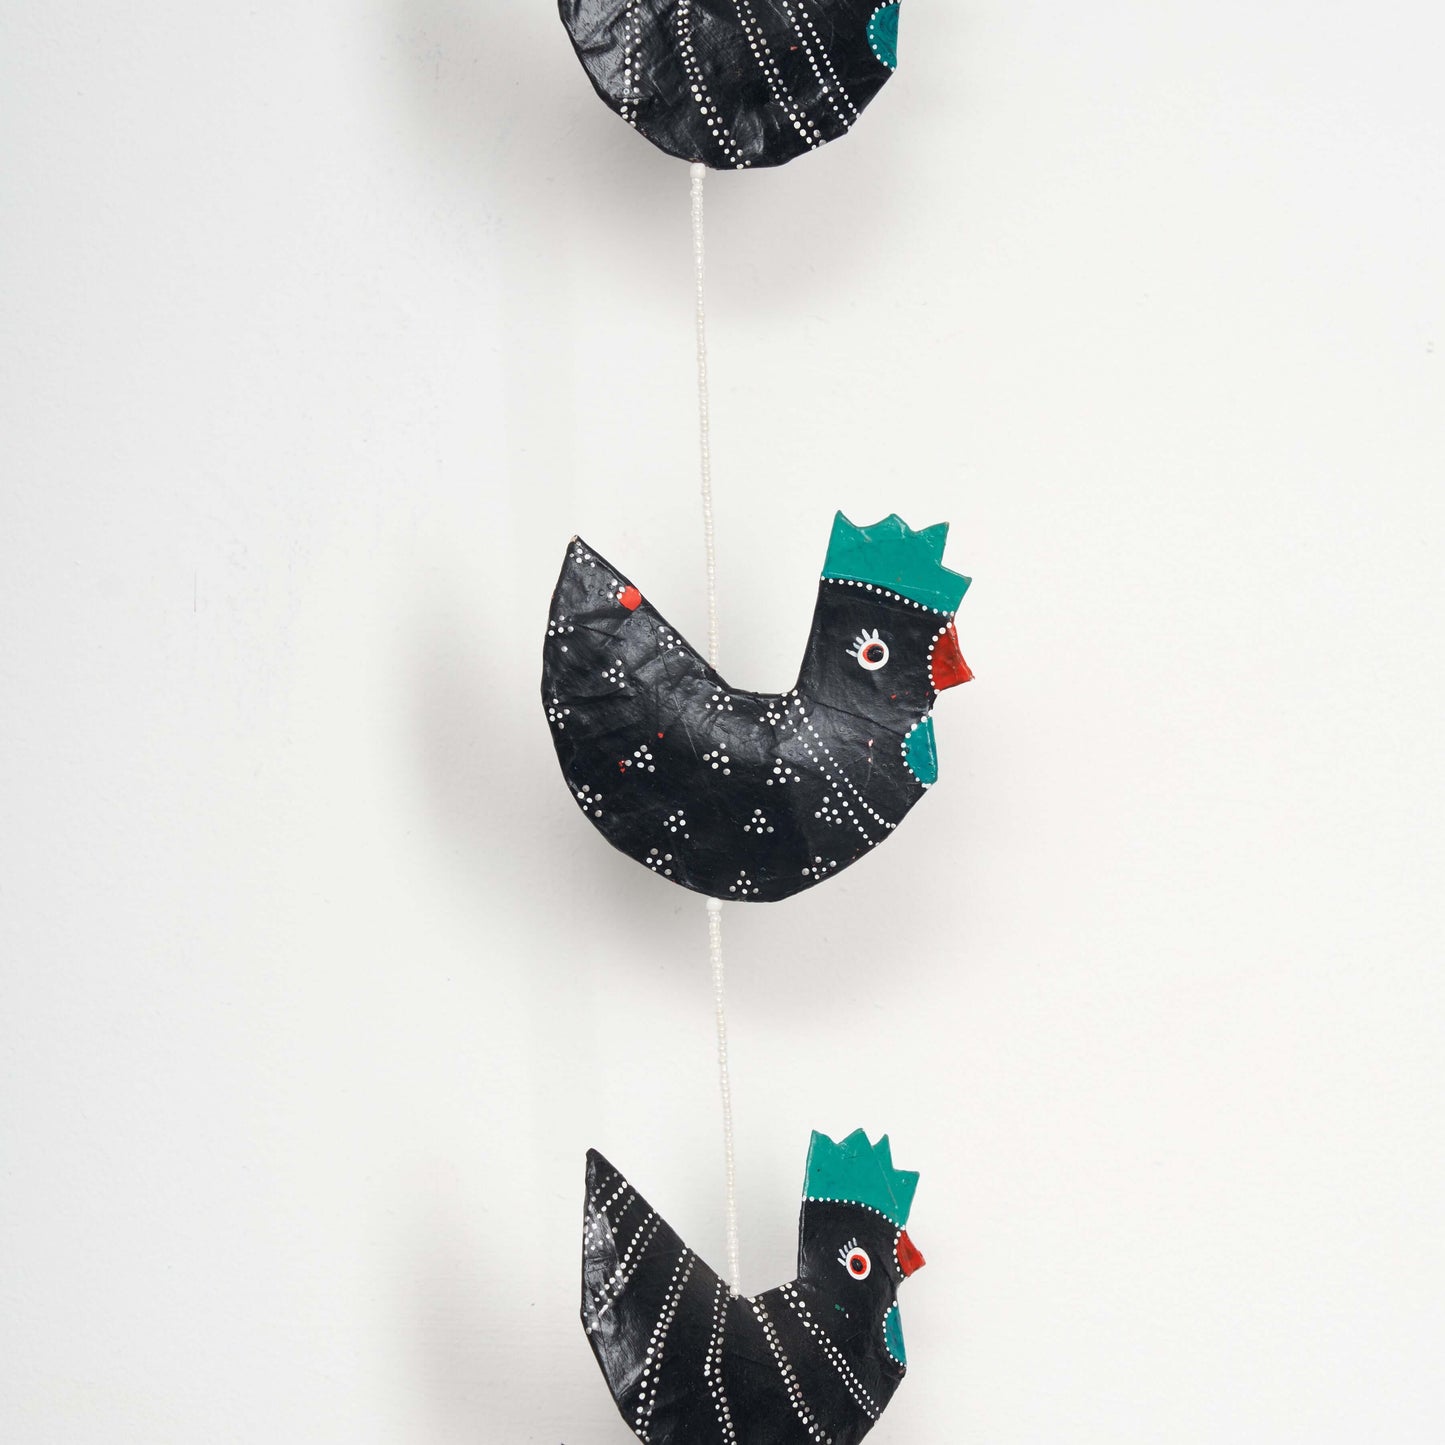 Girlande / Mobilé "Huhn" aus Pappmaché aus recyceltem Papier | Upcycling, handgemacht